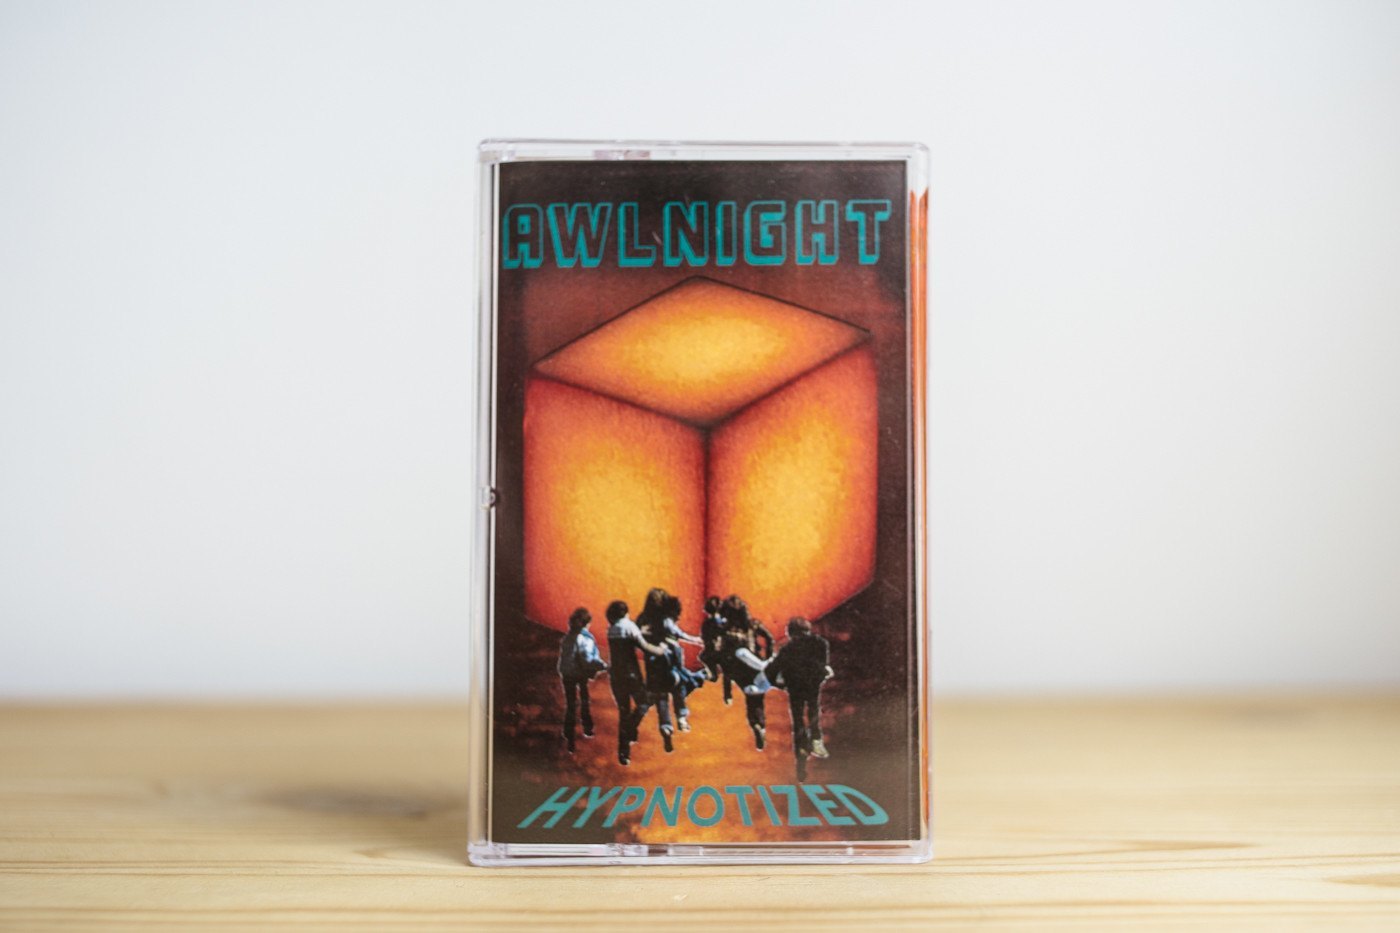 Awlnight - Hypnotized - Inner Ocean Records